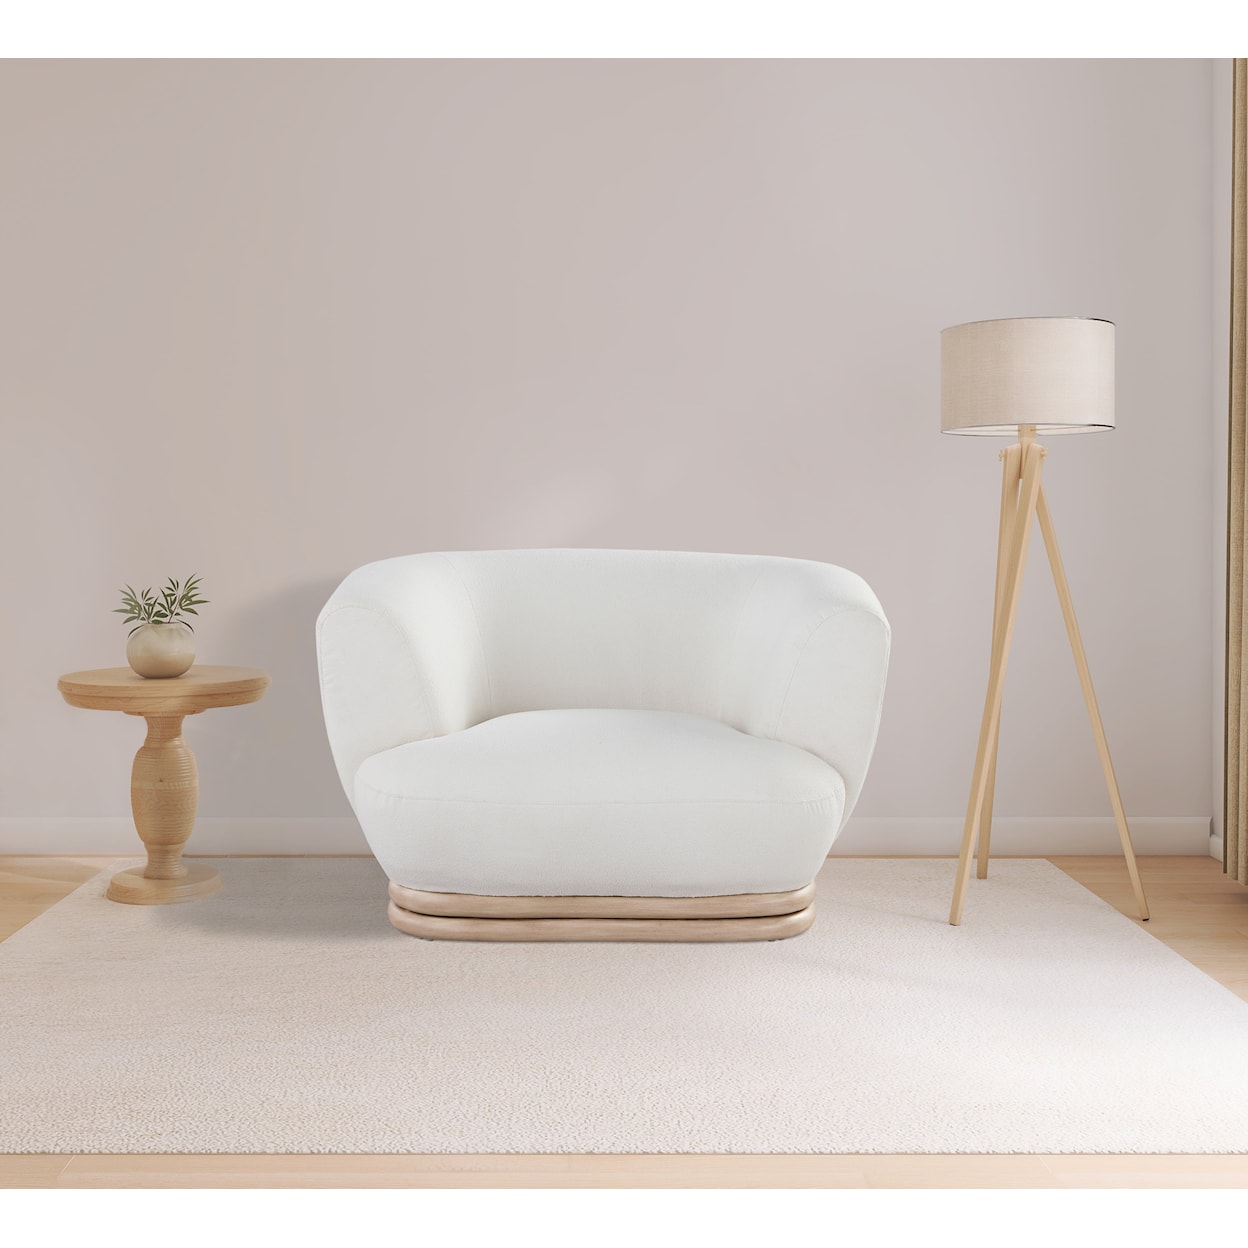 Meridian Furniture Kipton Chair